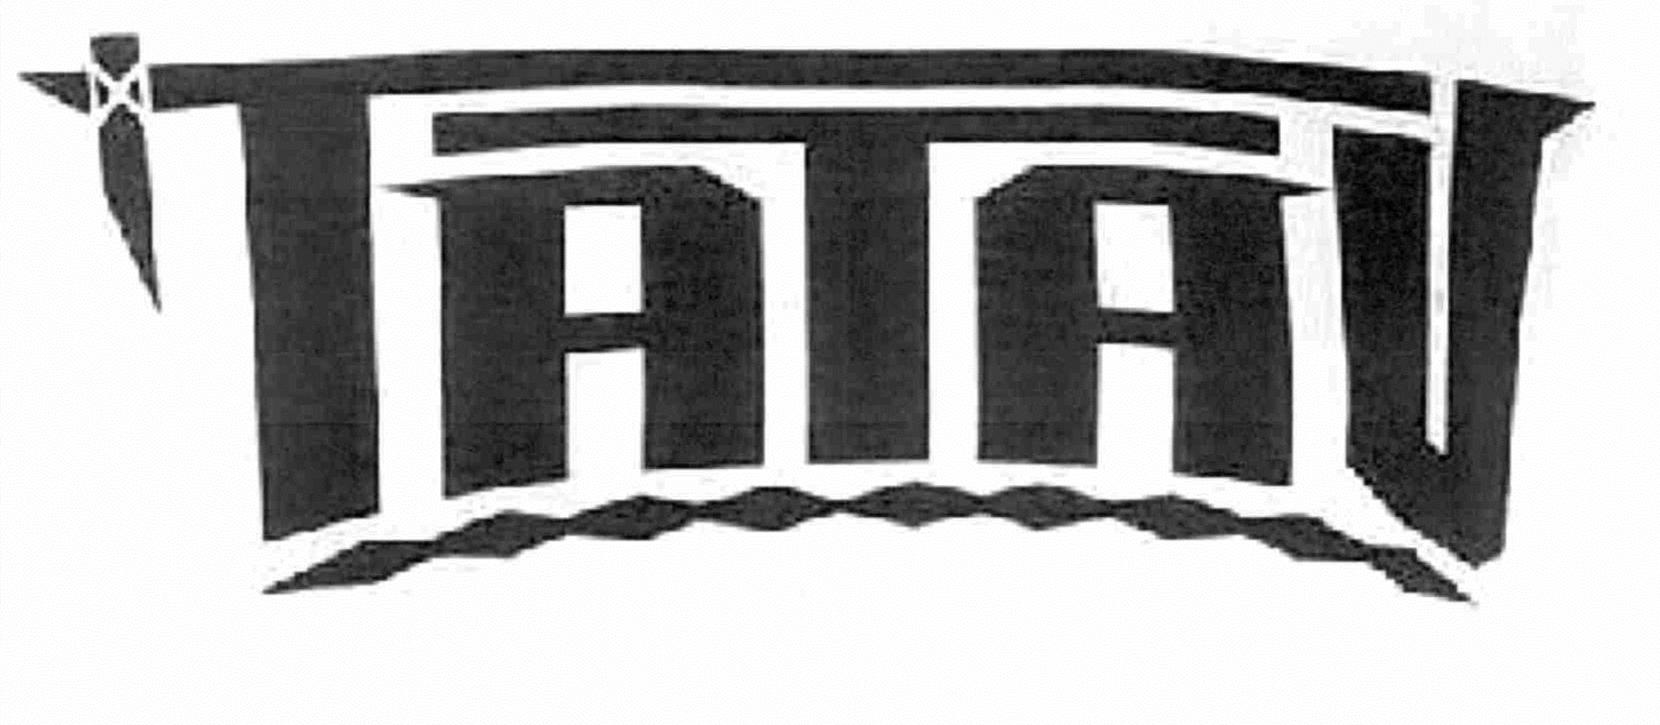 Trademark Logo TATAU